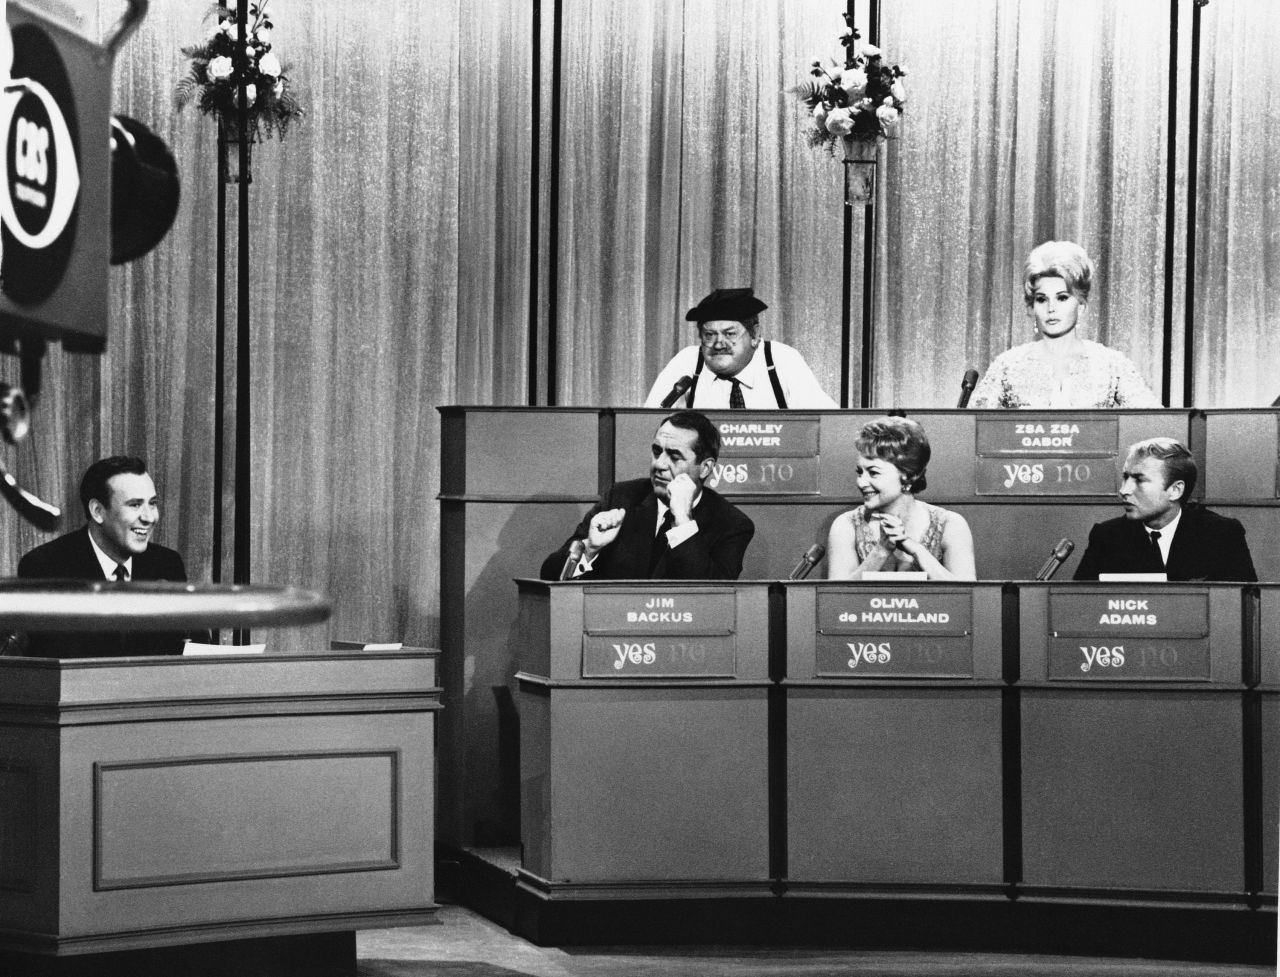 Reiner, left, hosts "The Celebrity Game" in March 1965.